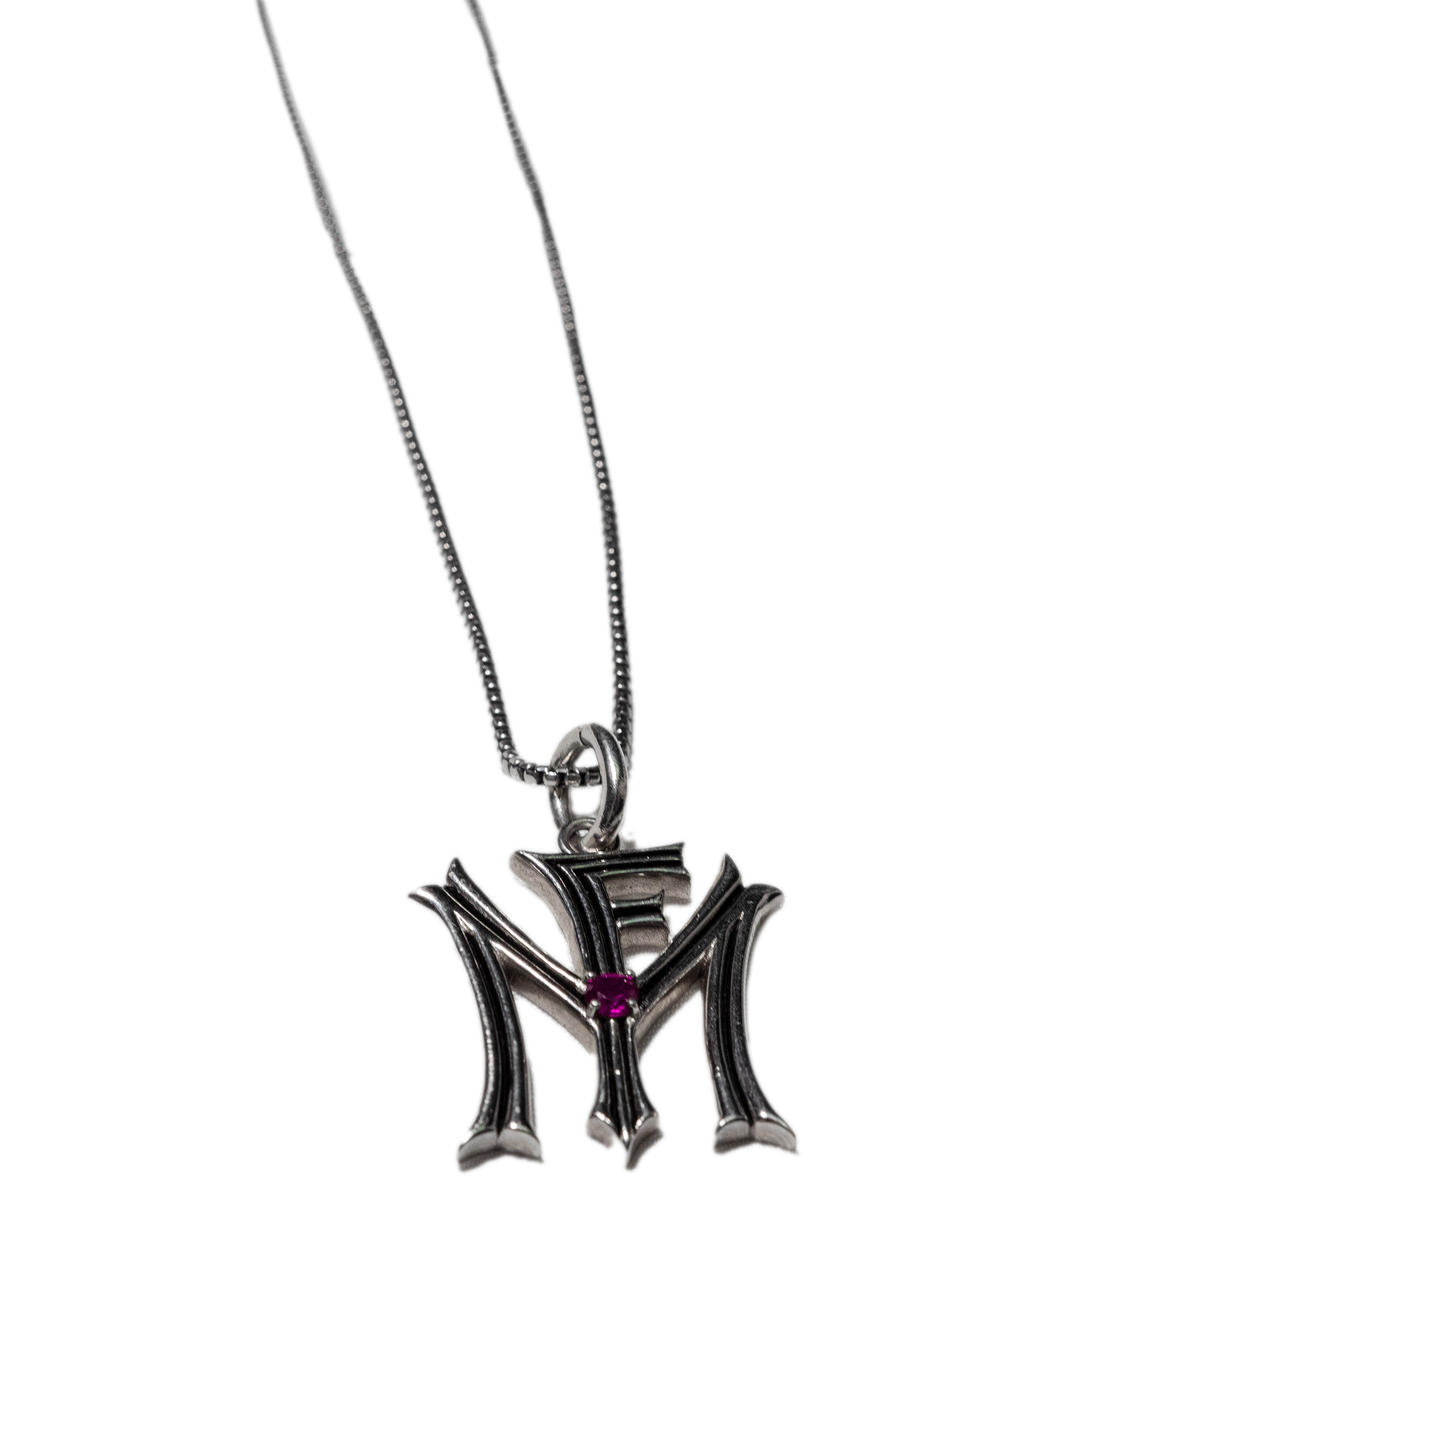 Fullmetal Chain + Pendant